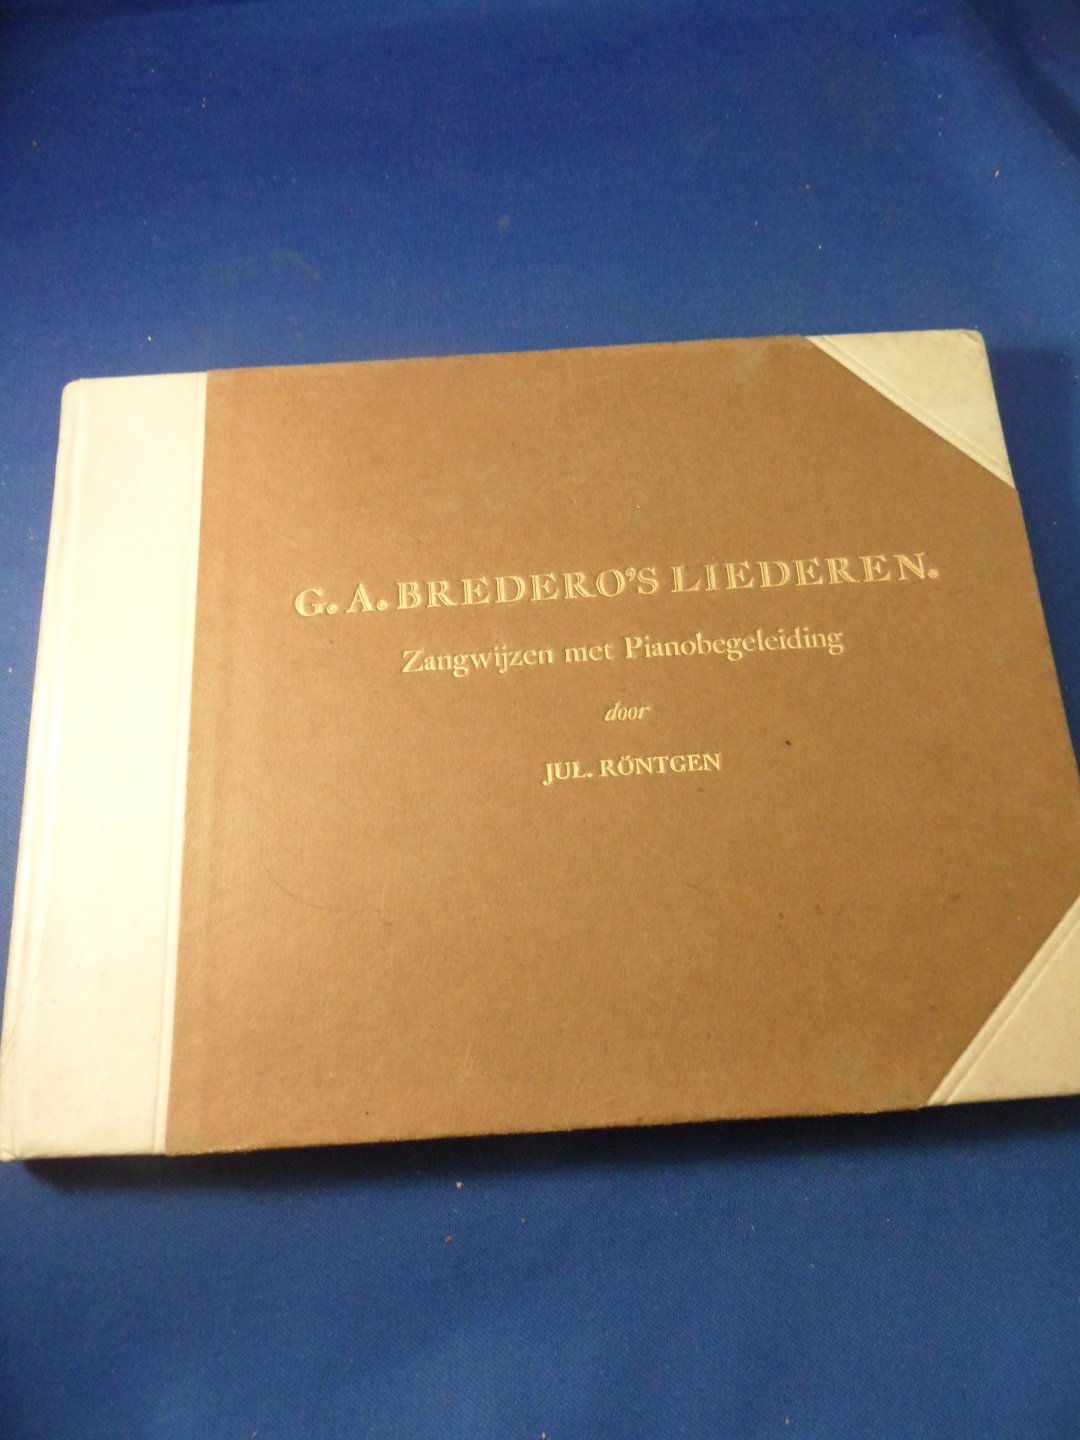 Bredero, G.A. - G.A. Bredero's liederen. Zangwijzen met Pianobegeleiding